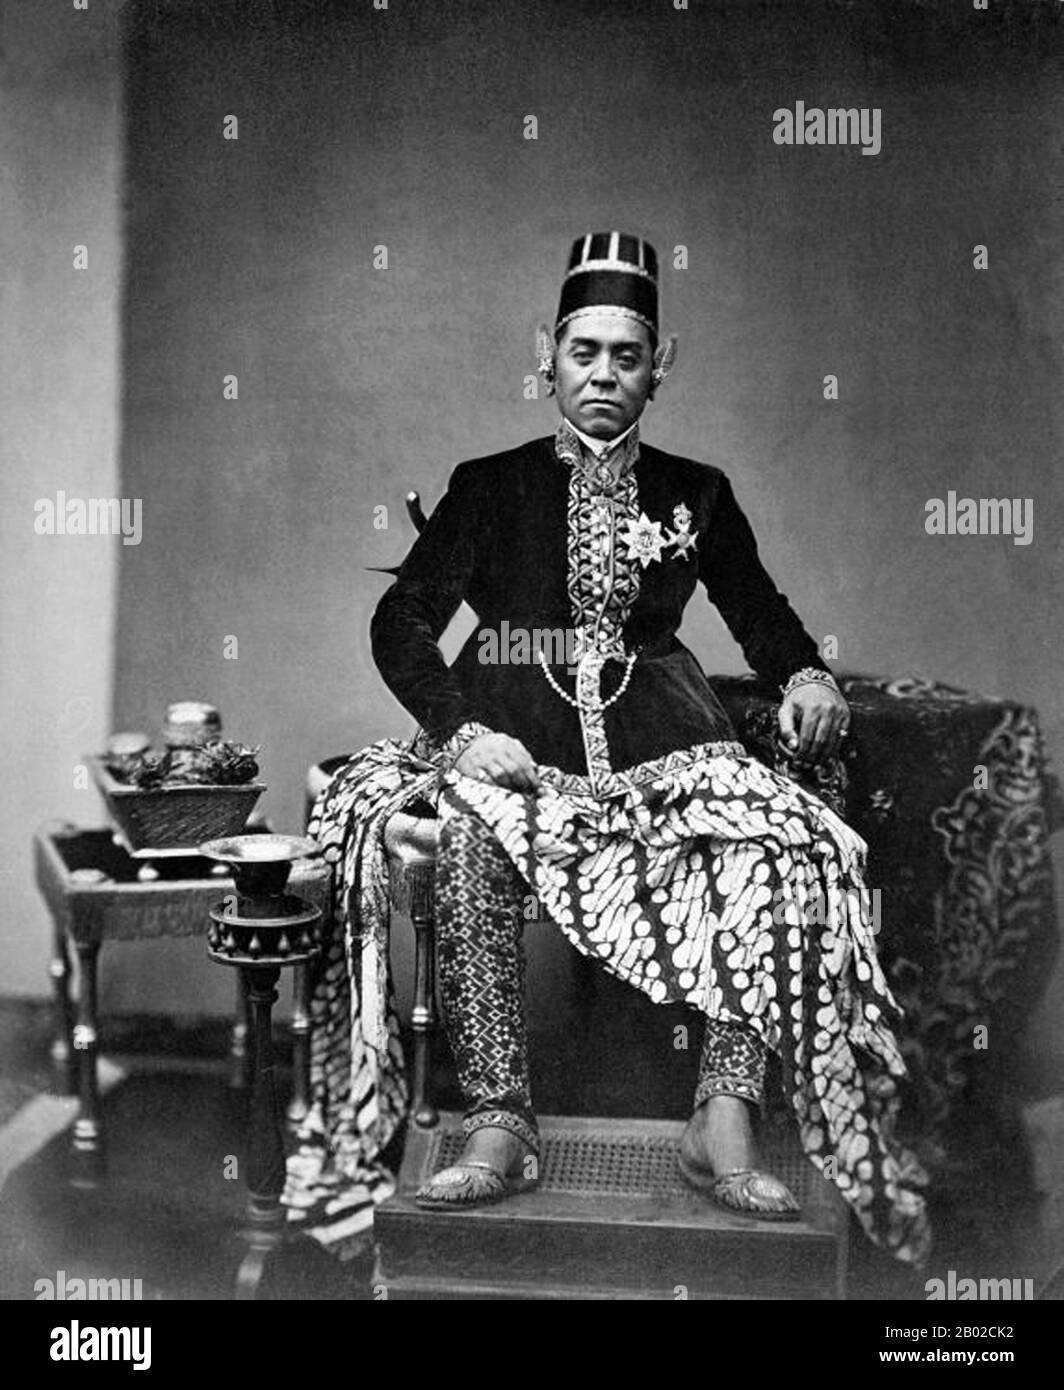 After Sultan Agung, the Sultanate of Mataram declined due to internal power struggles. The VOC (Dutch East India Company) exploited this internal discord to increase its control. At the peak of the conflict, the Mataram Sultanate was split in two based on the Treaty of Giyanti of February 13, 1755, creating the  Yogyakarta Sultanate and Surakarta Sunanate.  The Giyanti Treaty named Pangeran Mangkubumi as Sultan of Yogyakarta with the title of Sampeyan Dalem Ingkang Sinuwun Kanjeng Sultan Hamengkubuwono Senopati Ingalaga Abdul Rakhman Sayidin Khalifatullah Panatagama (His Majesty, The Sultan-Ca Stock Photo